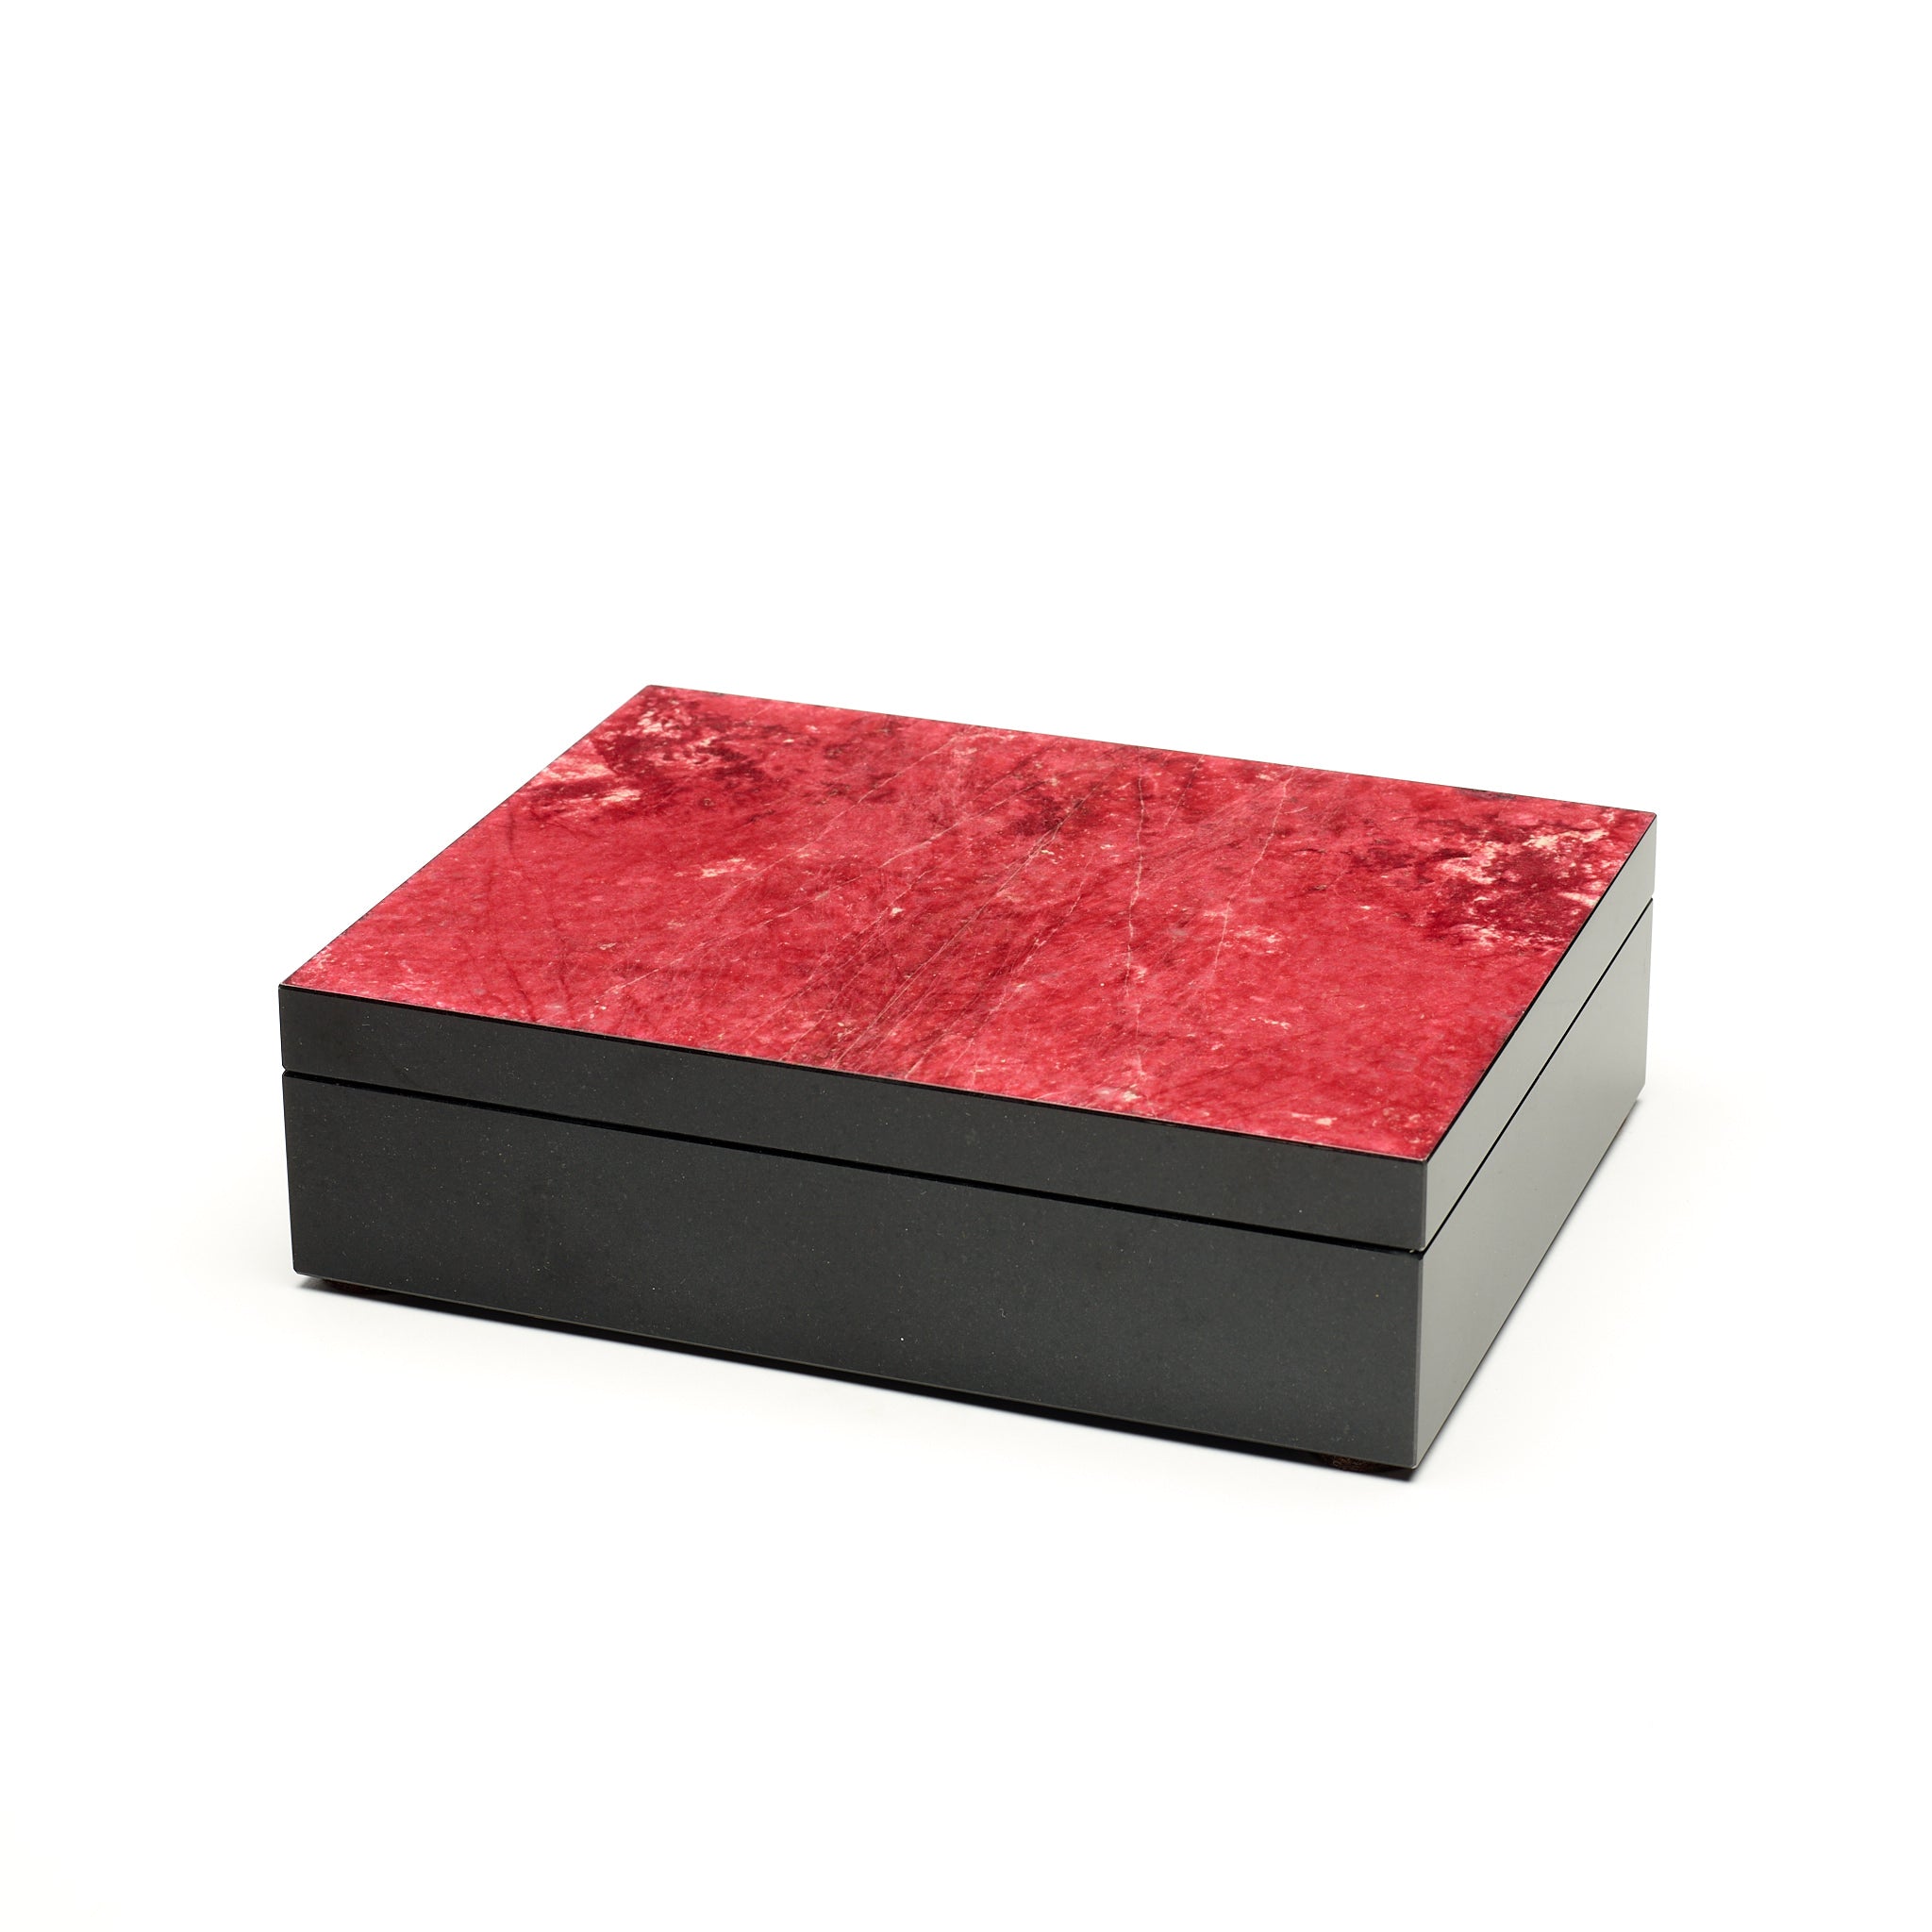 Thulite Box with Spanish Cedar Presentation Box